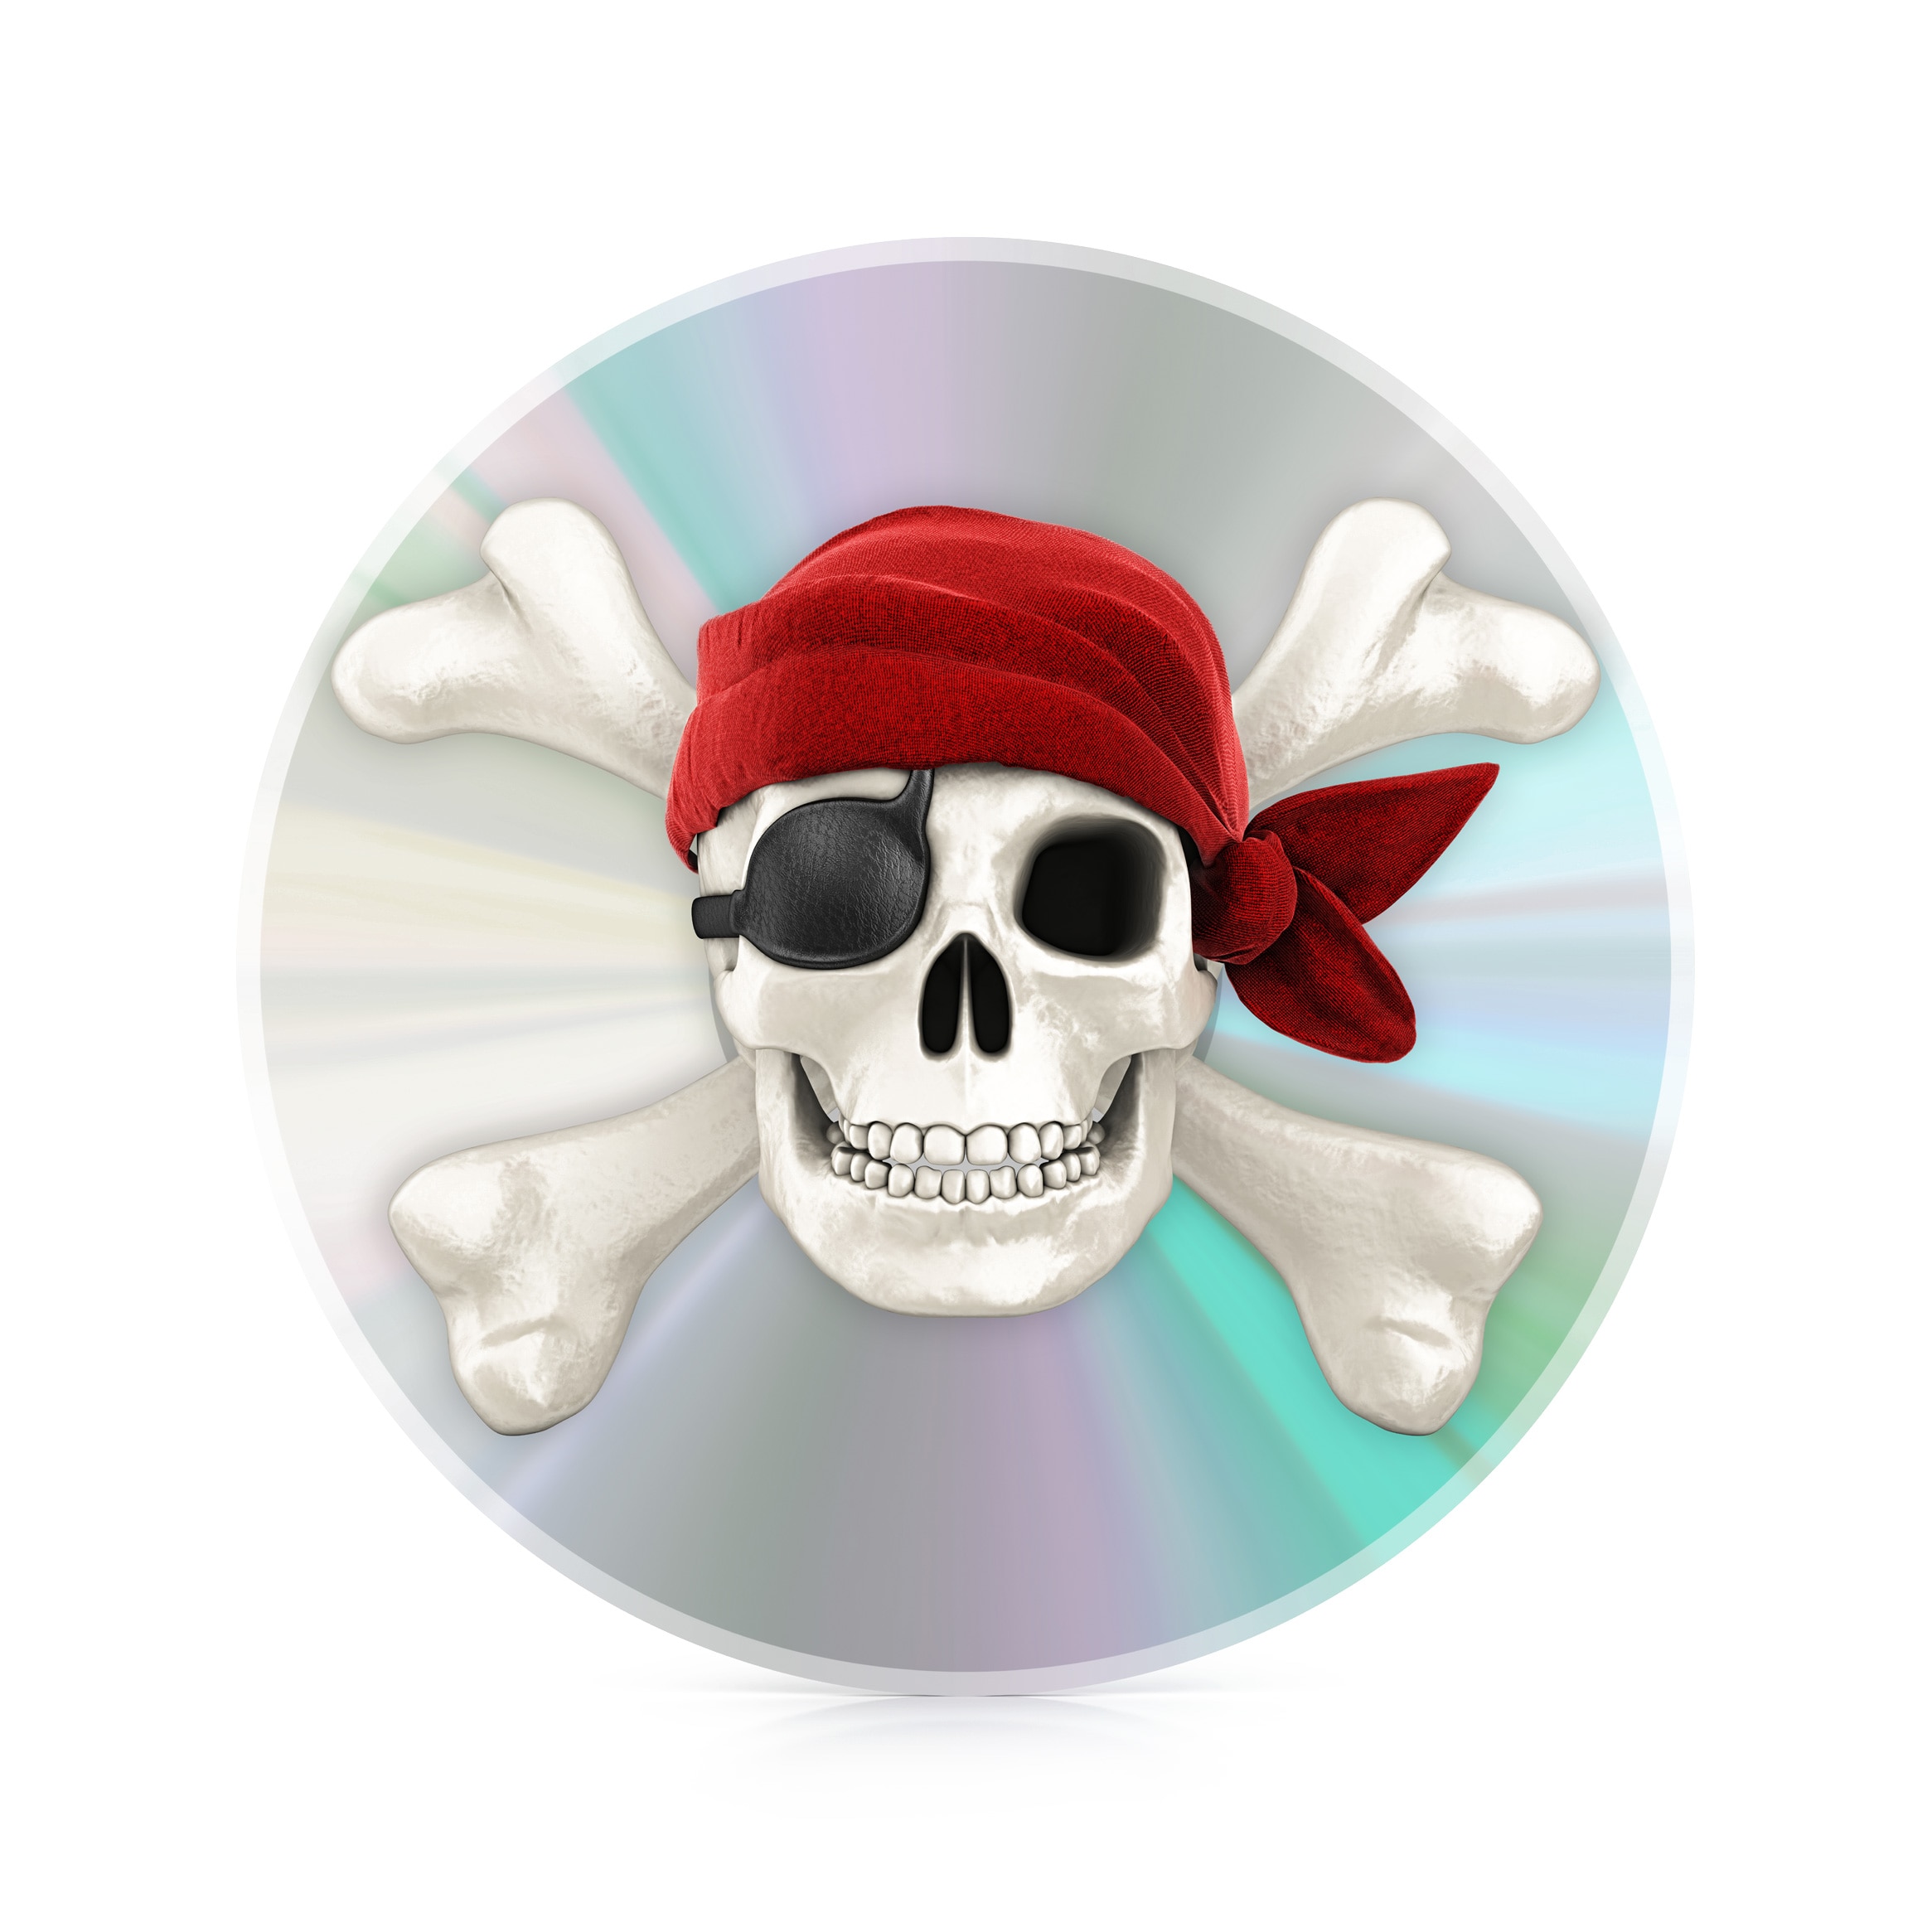 Instalación de software pirata